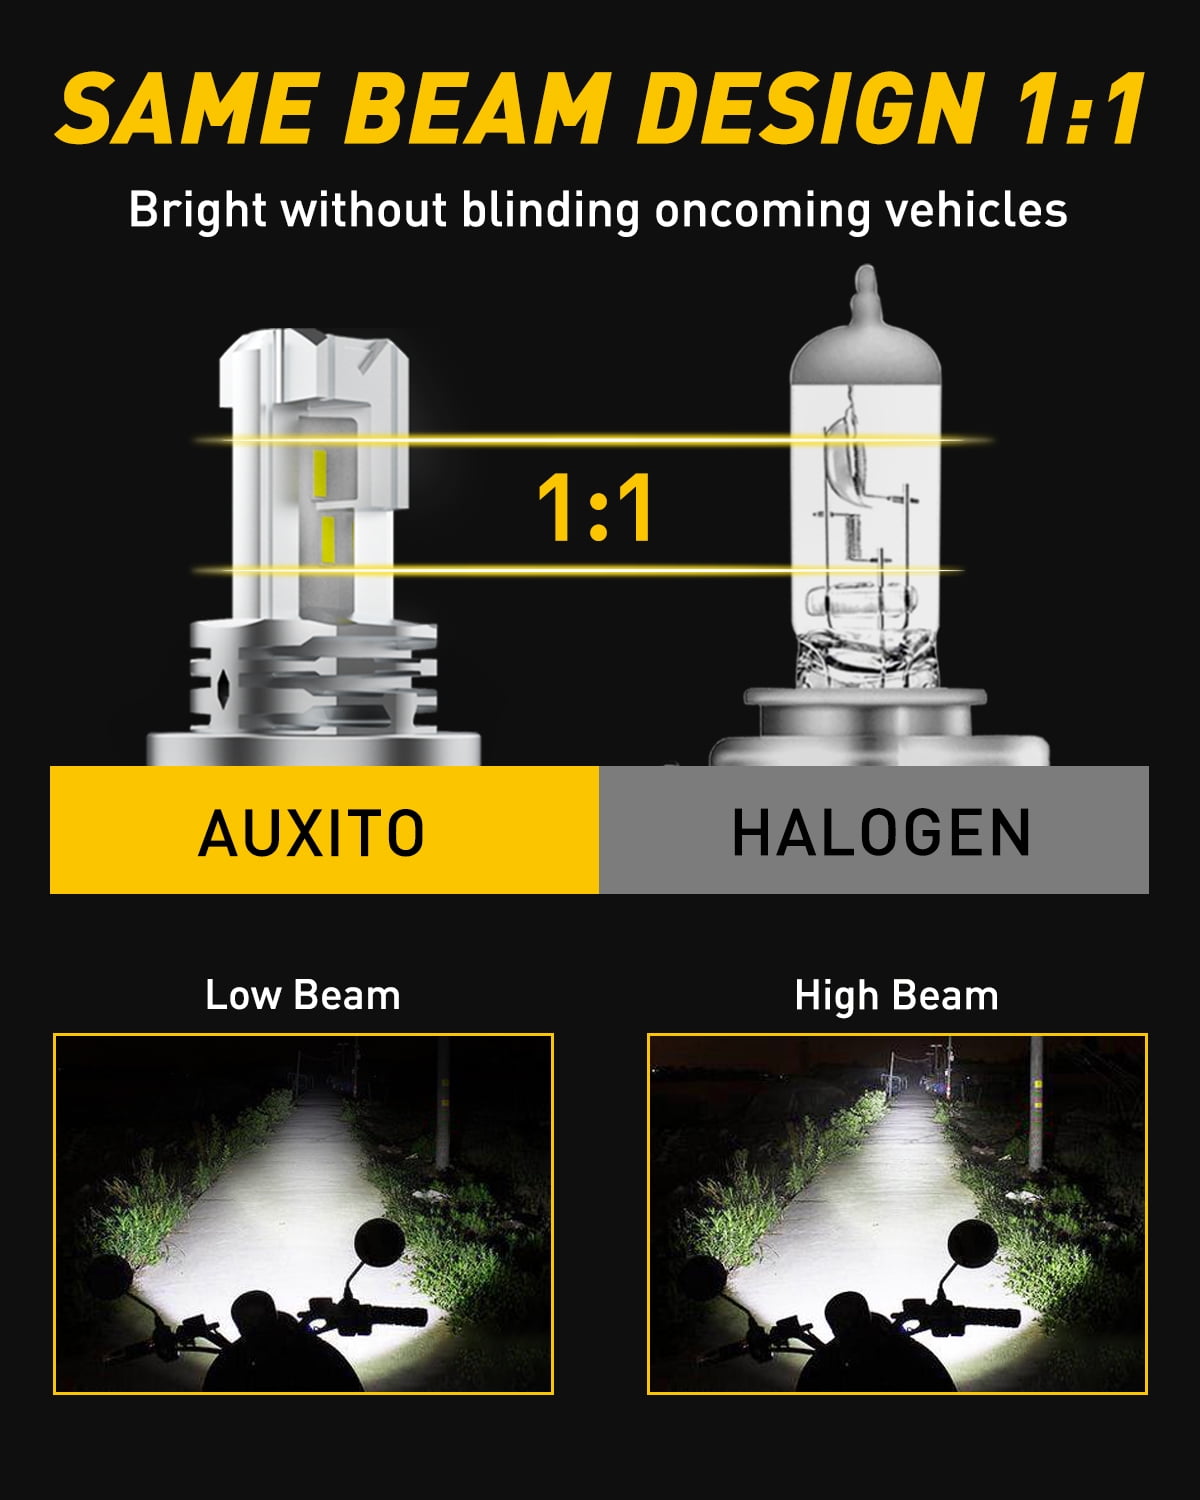 AUXITO-bombilla LED H4 360 para faro delantero de motocicleta